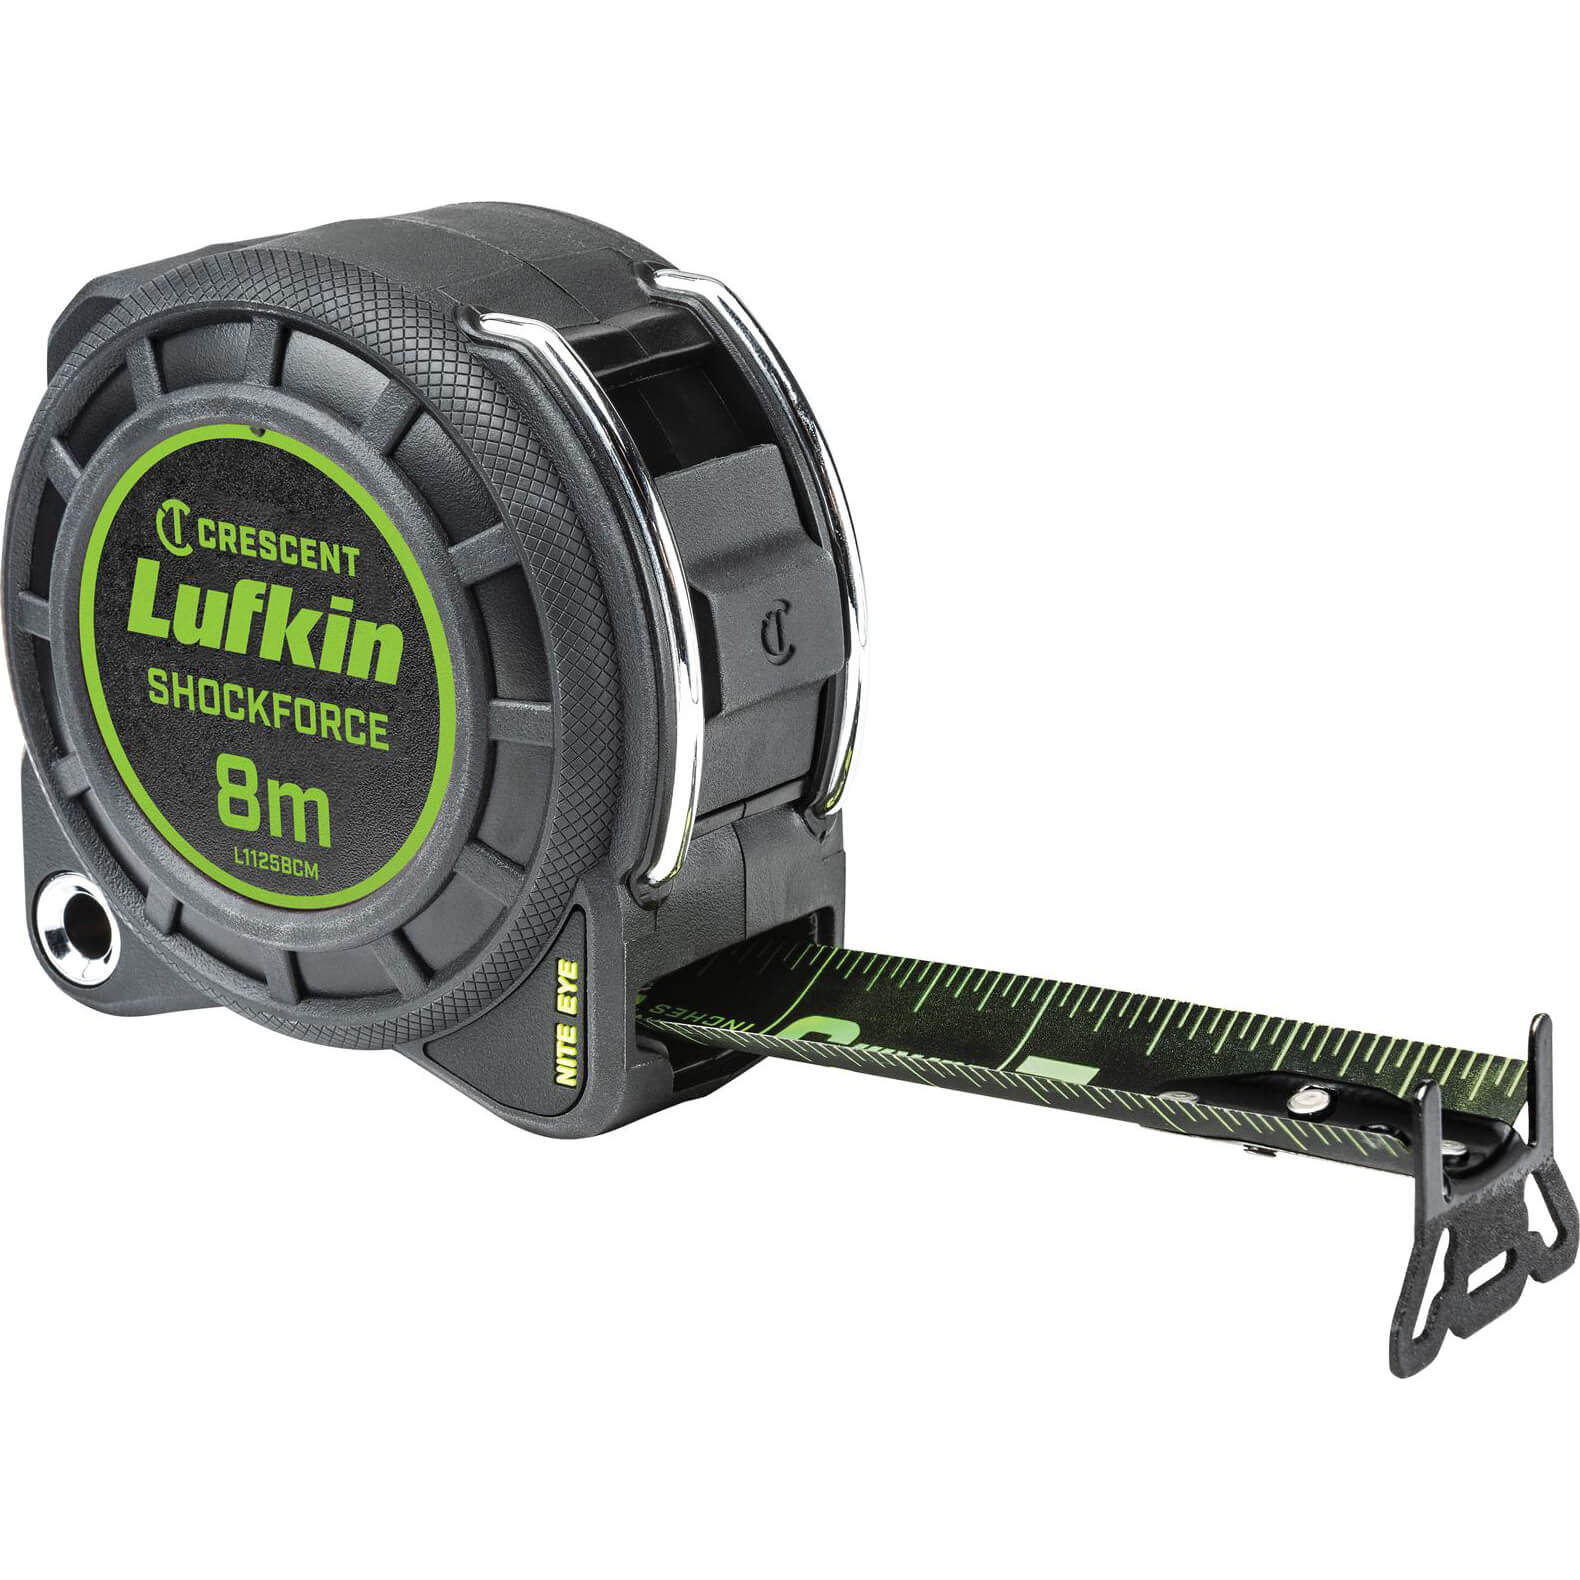 Photo of Crescent Lufkin Shockforce Night Eye Dual Sided Tape Measure Metric 8m 30mm